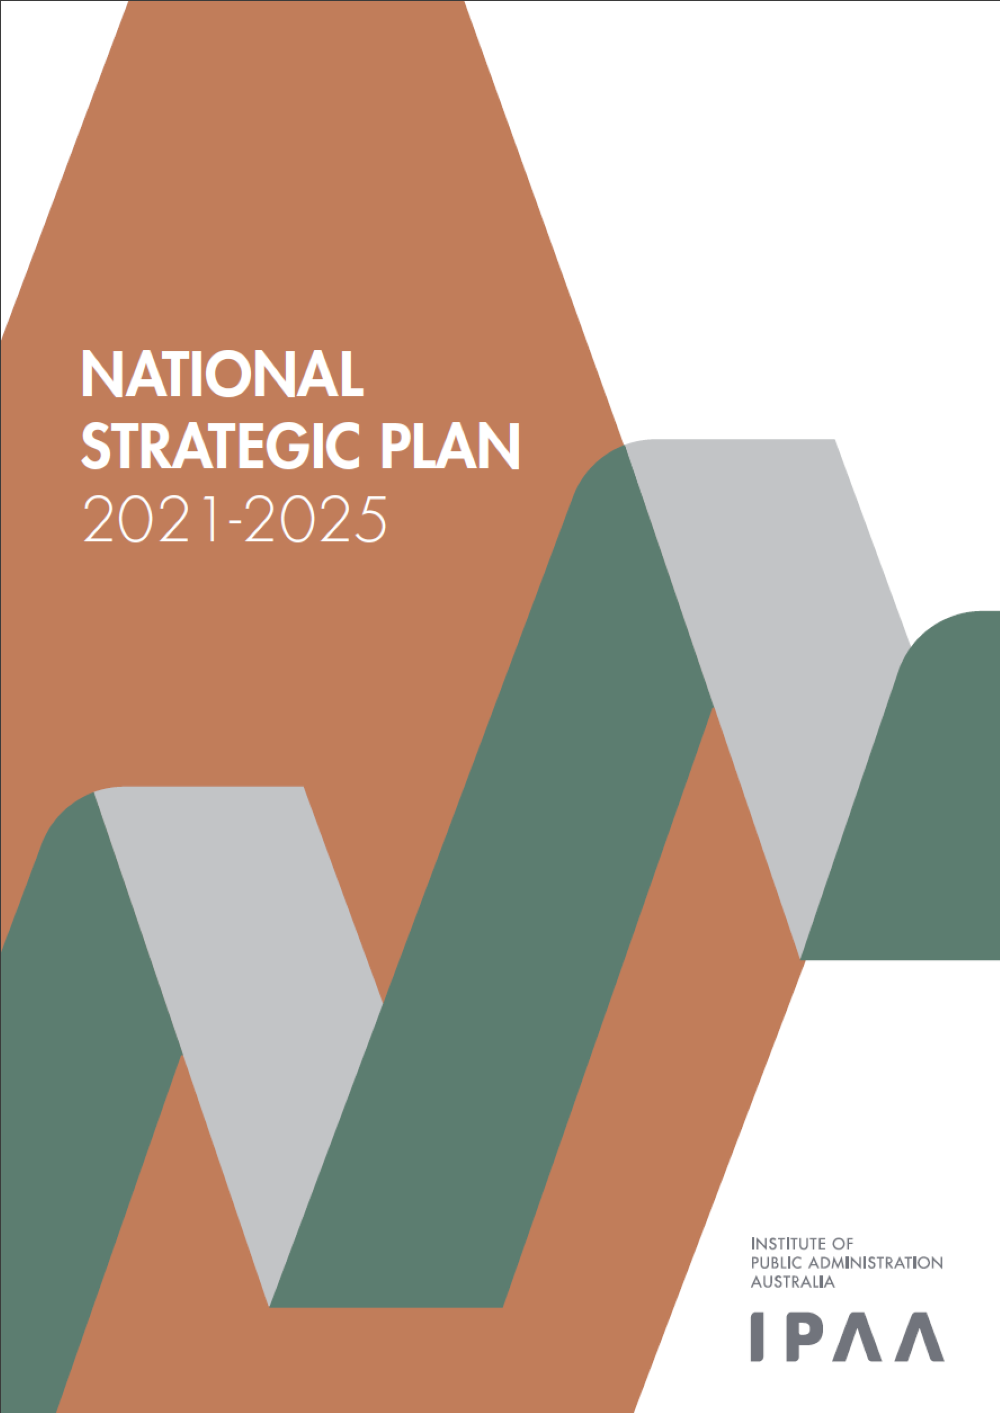 National Strategic Plan cover design